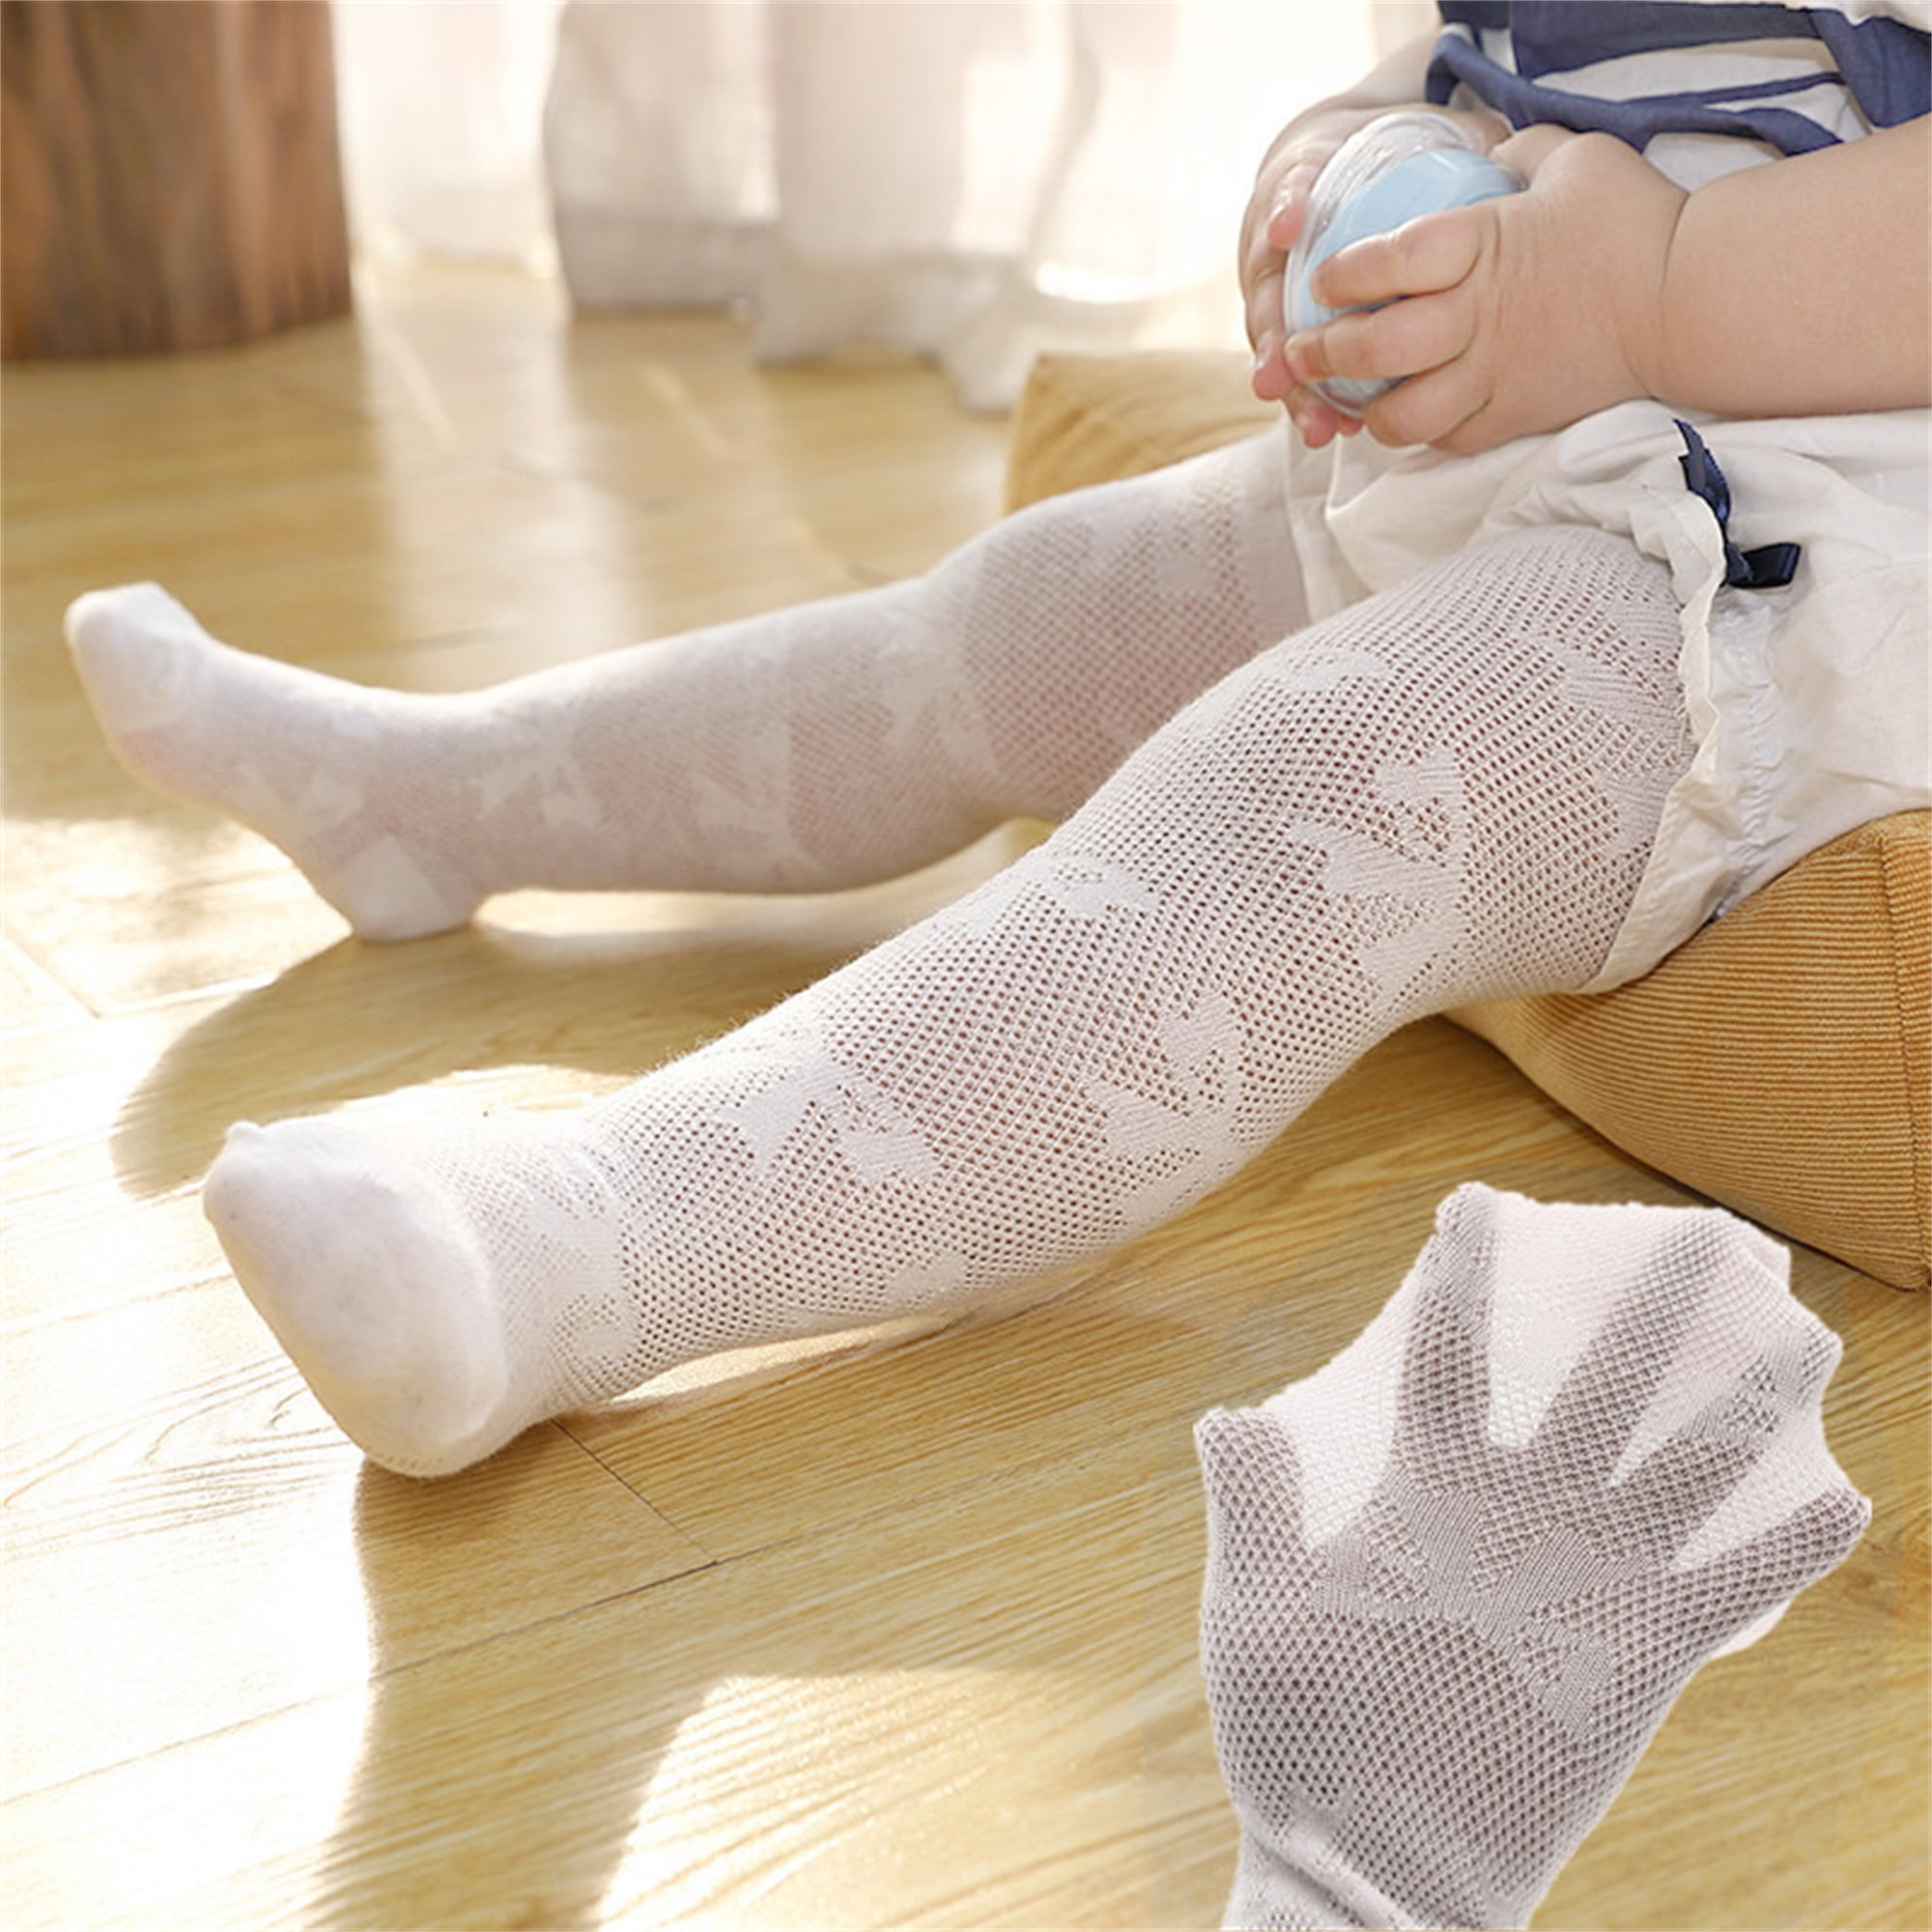 BuyAdorable Leggings for Baby Girls - Tinyjumps